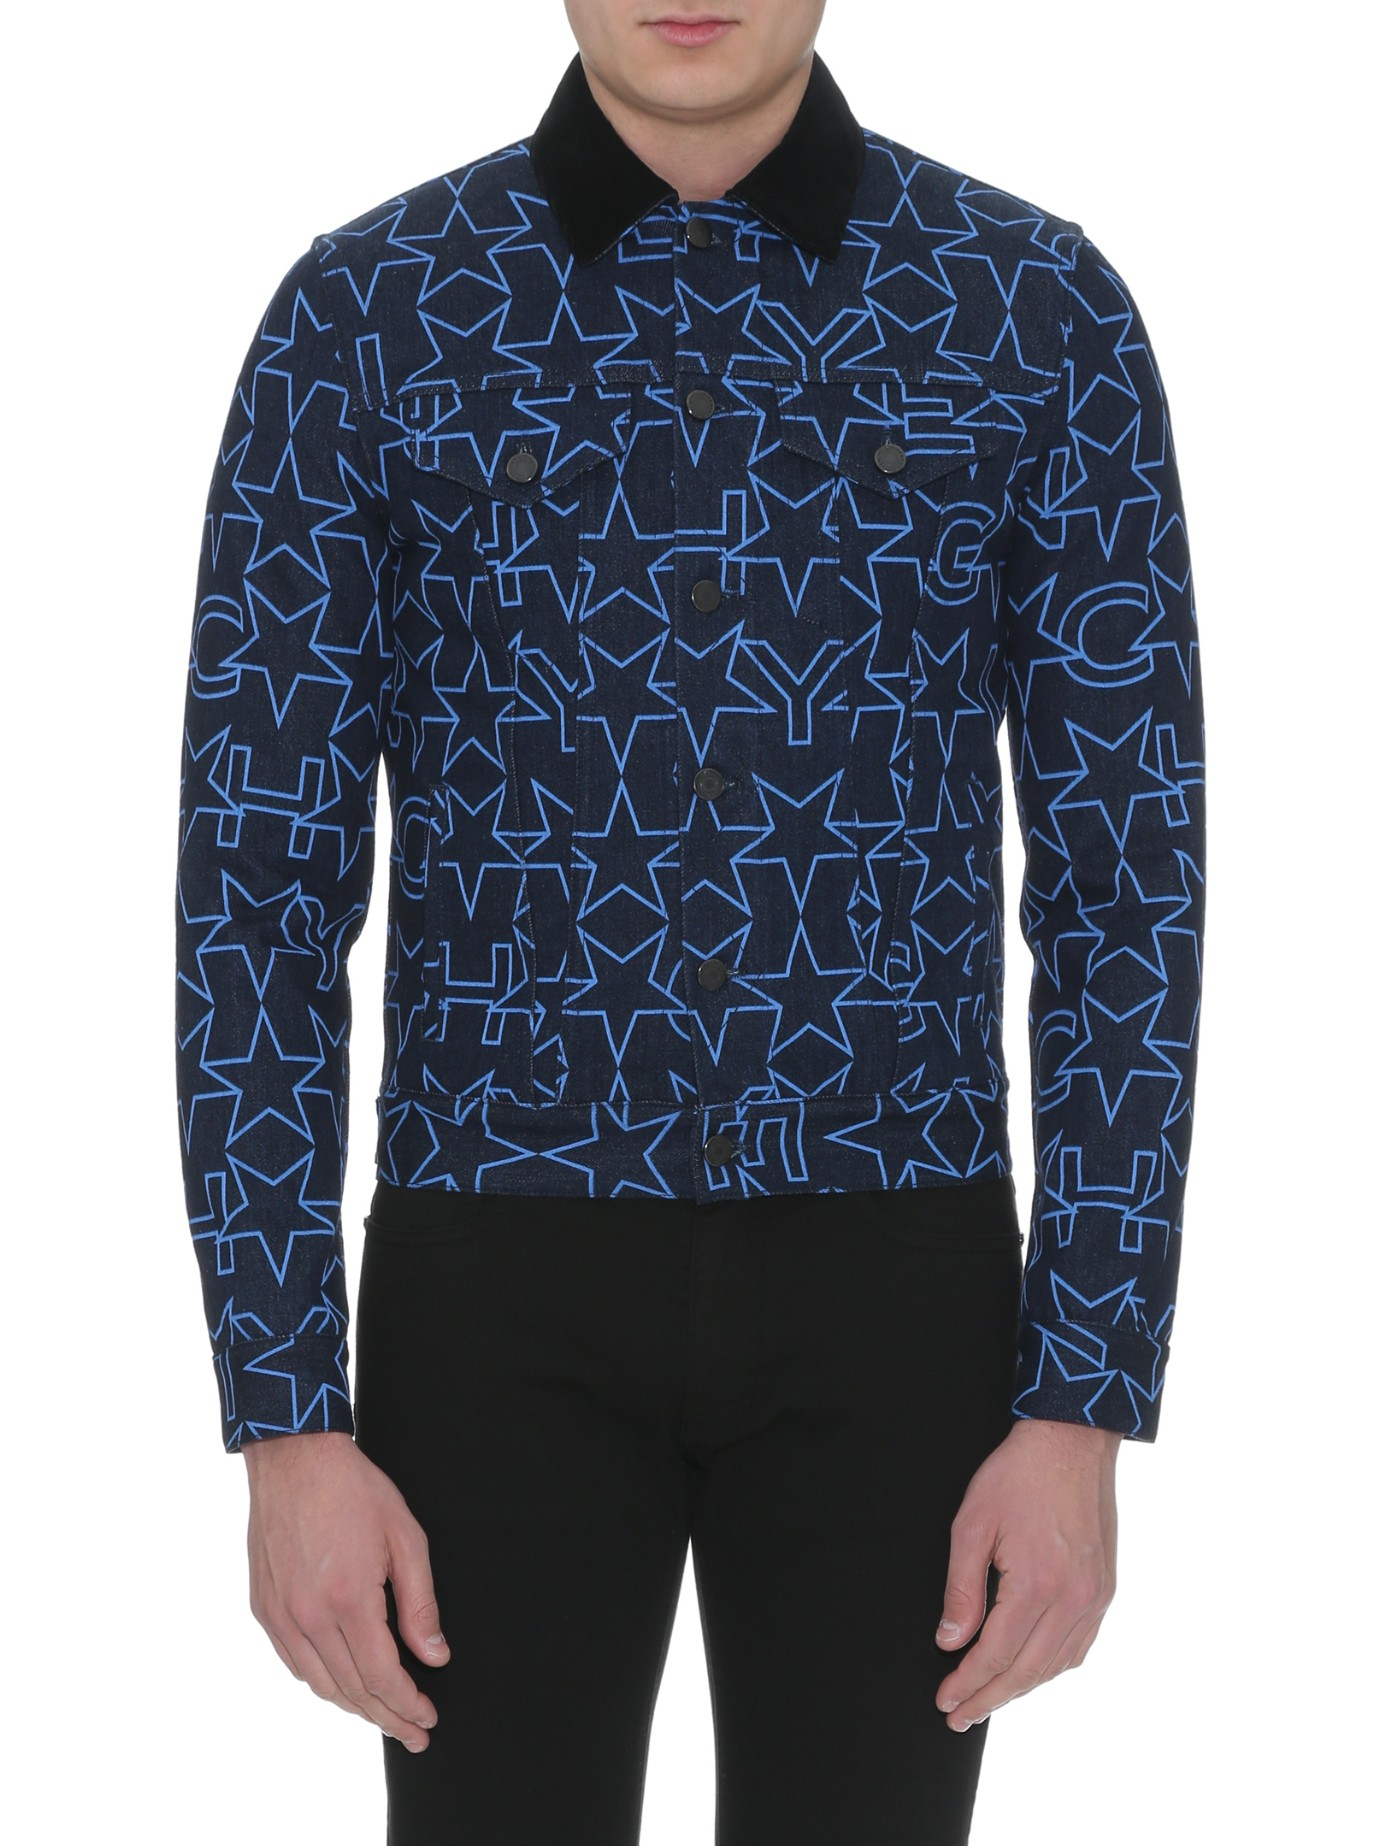 Givenchy Star-print Denim Jacket in Navy (Blue) for Men - Lyst